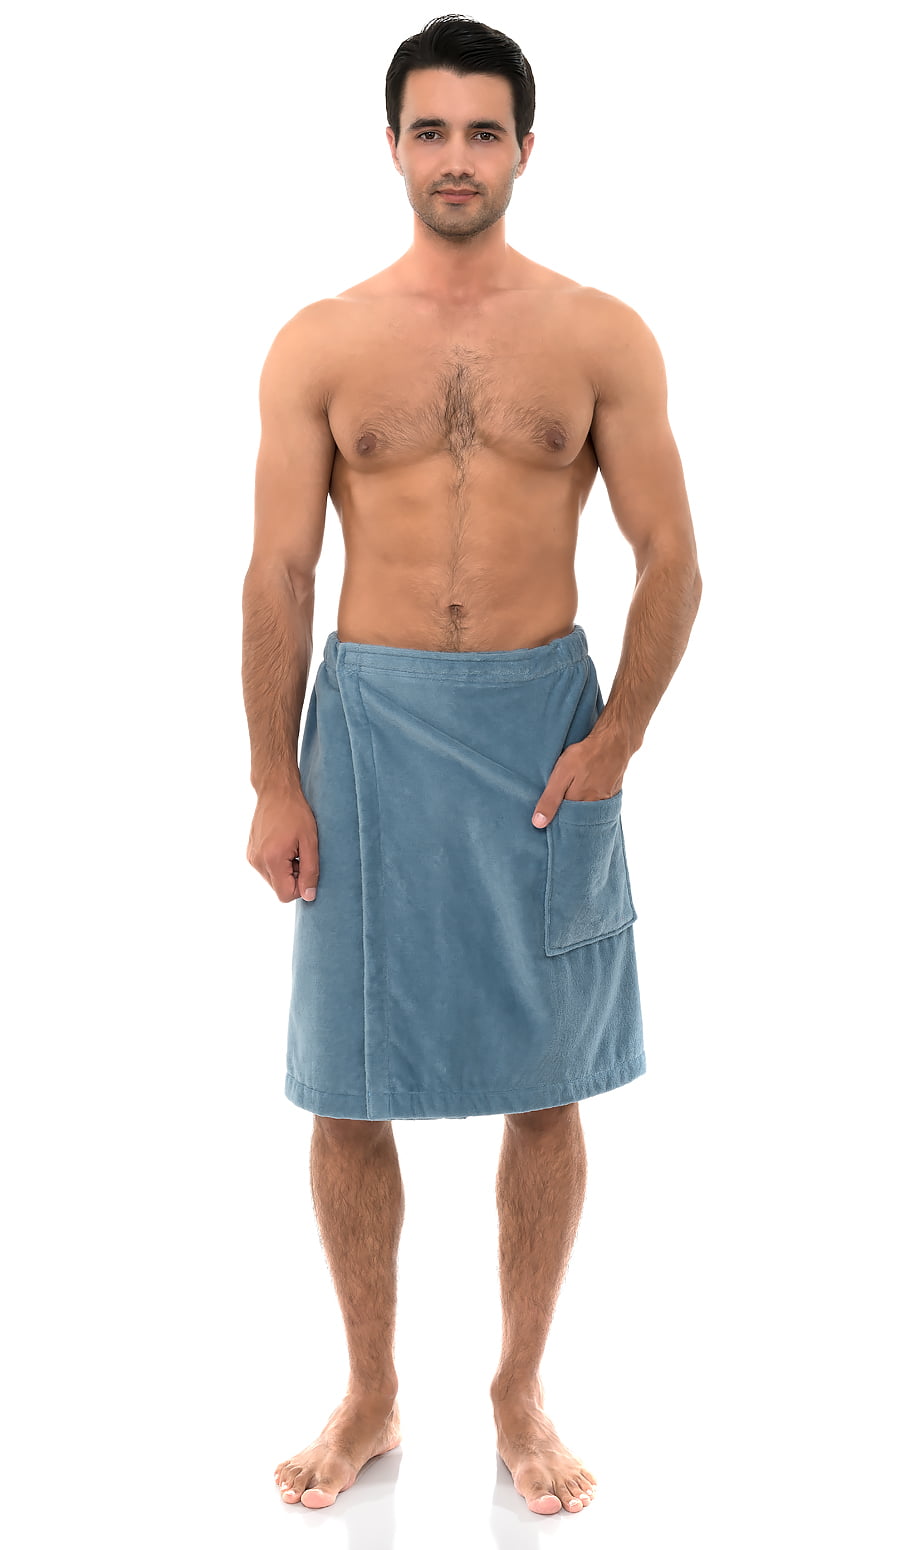 TowelSelections Men's Wrap Adjustable Cotton Velour Shower & Bath Body Cover Up Robe 